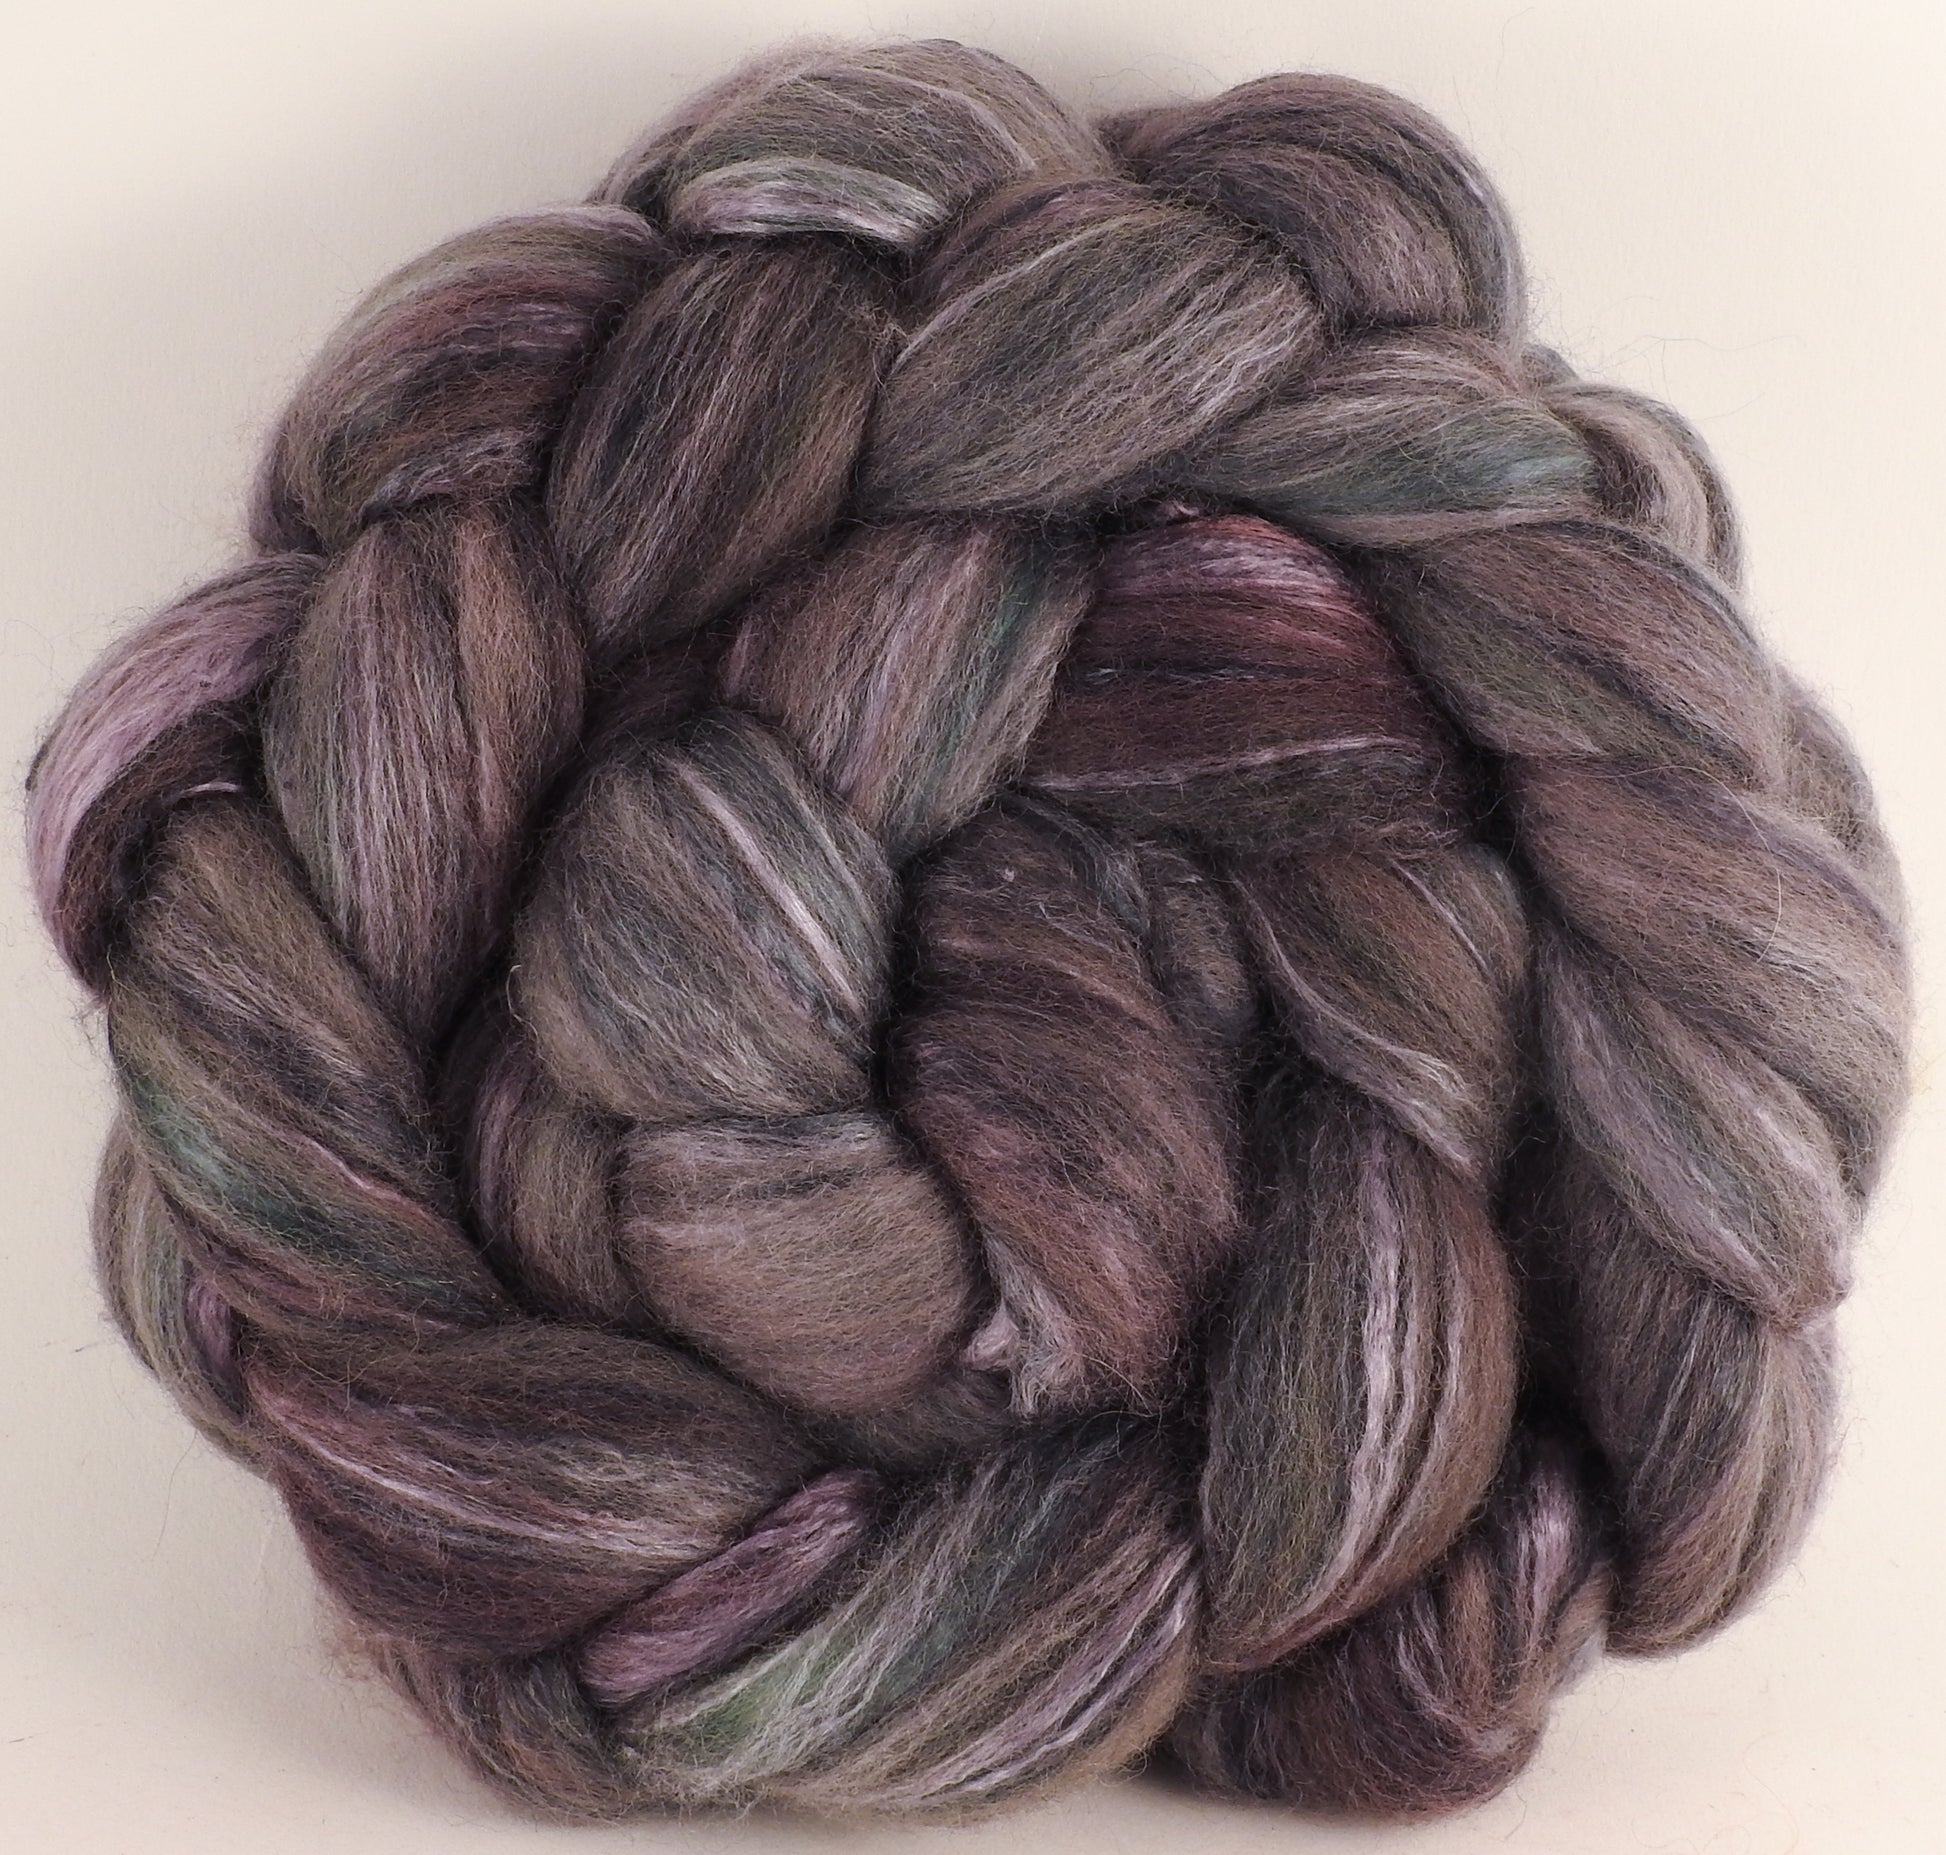 Batt in a Braid #45 - Asphalt (5.6 oz.) - Corriedale/Mulberry Silk/Rose Fiber (60/20/20) - Inglenook Fibers